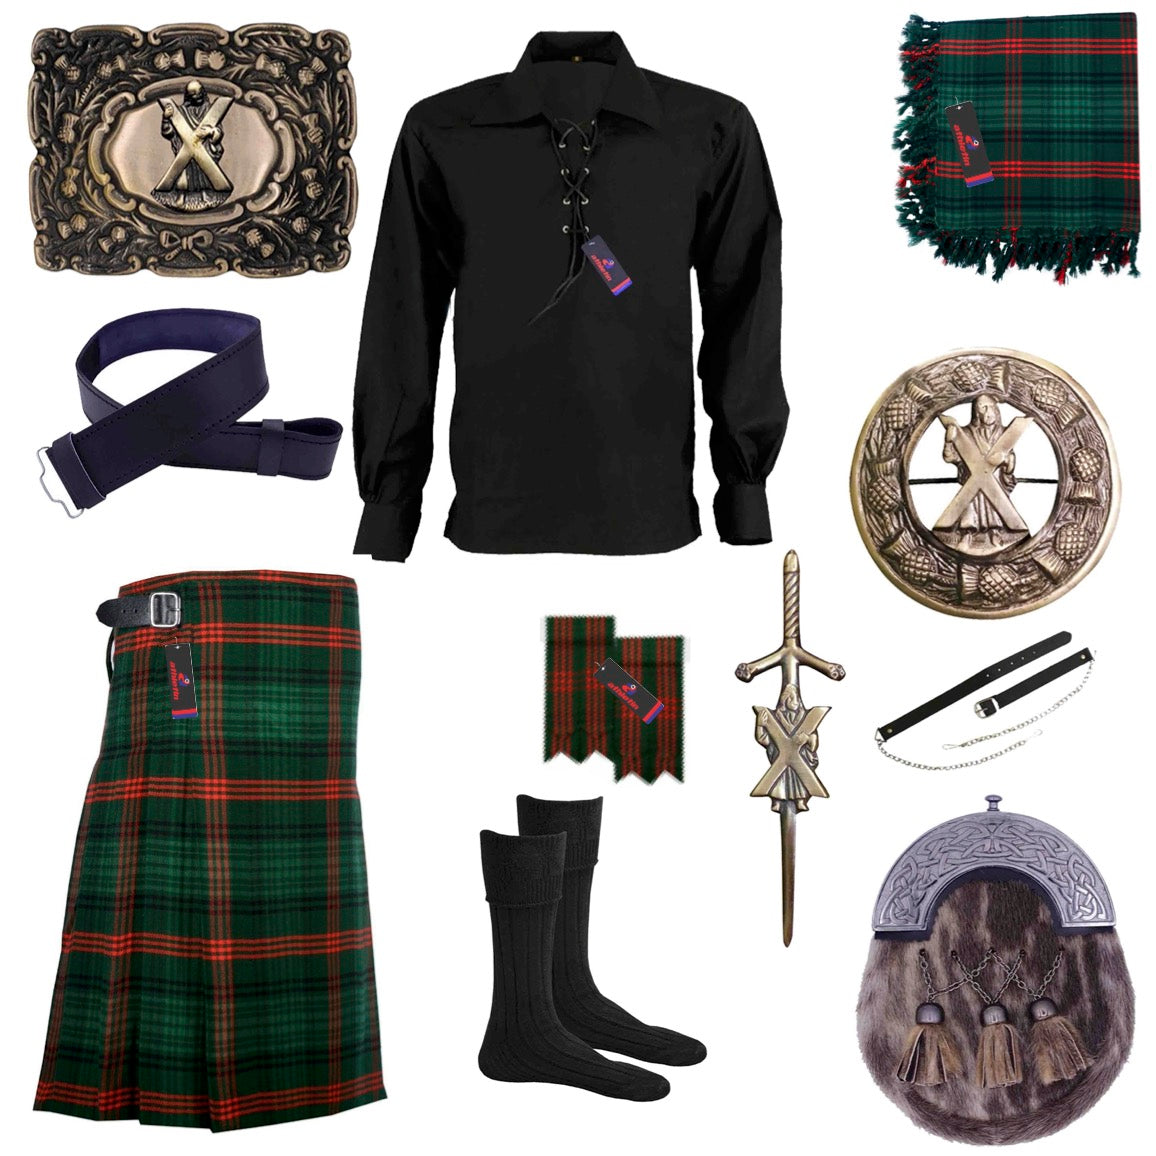 Ross Hunting Scottish Highland Kilt ST Andrew Outfit - Athletin